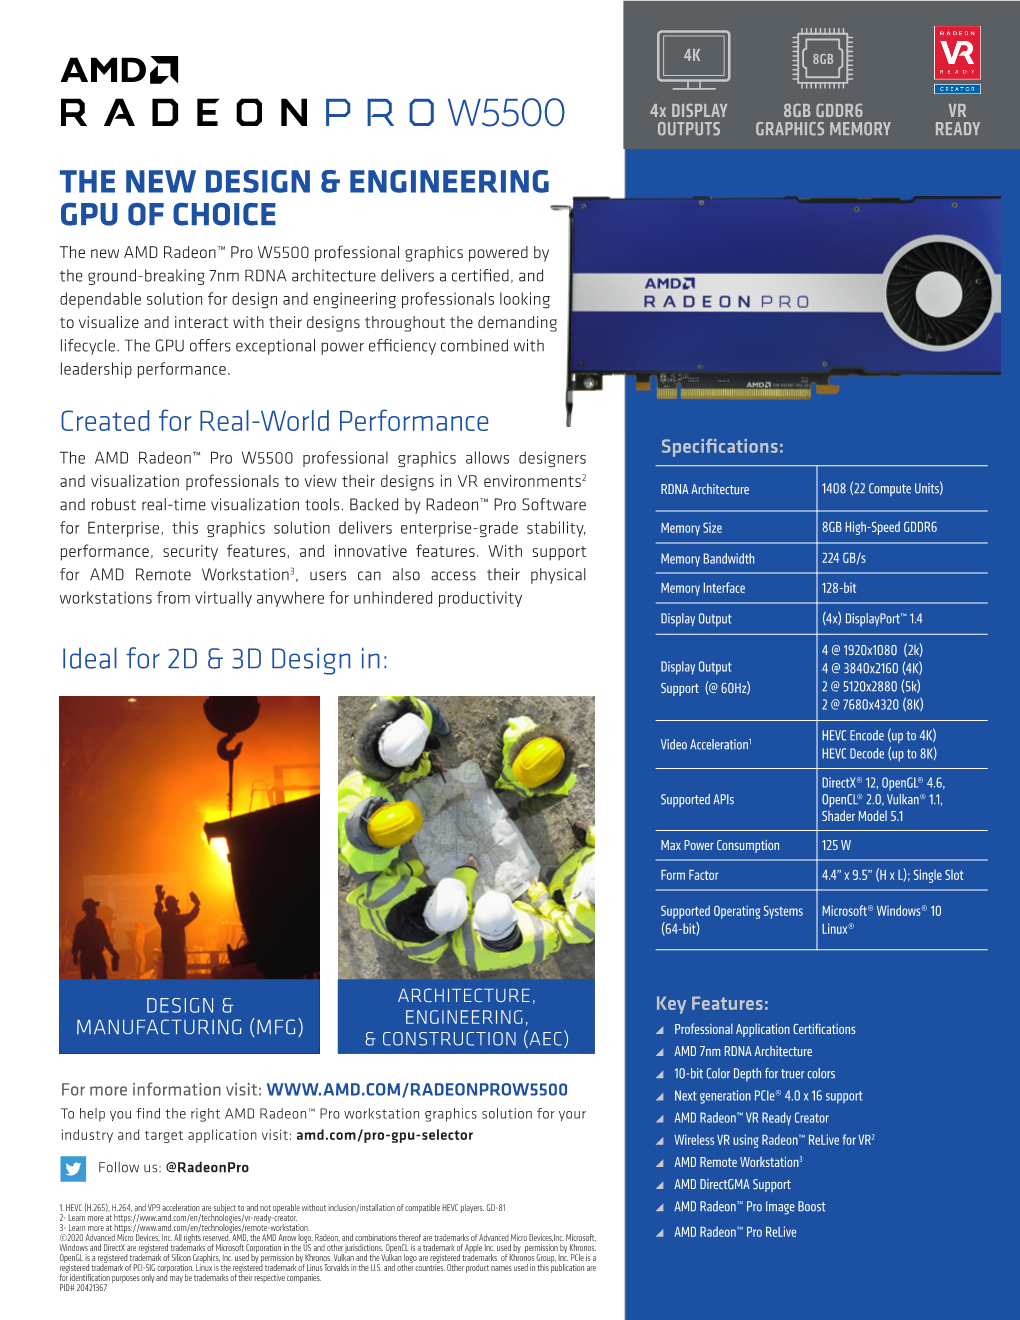 The New Design & Engineering Gpu of Choice